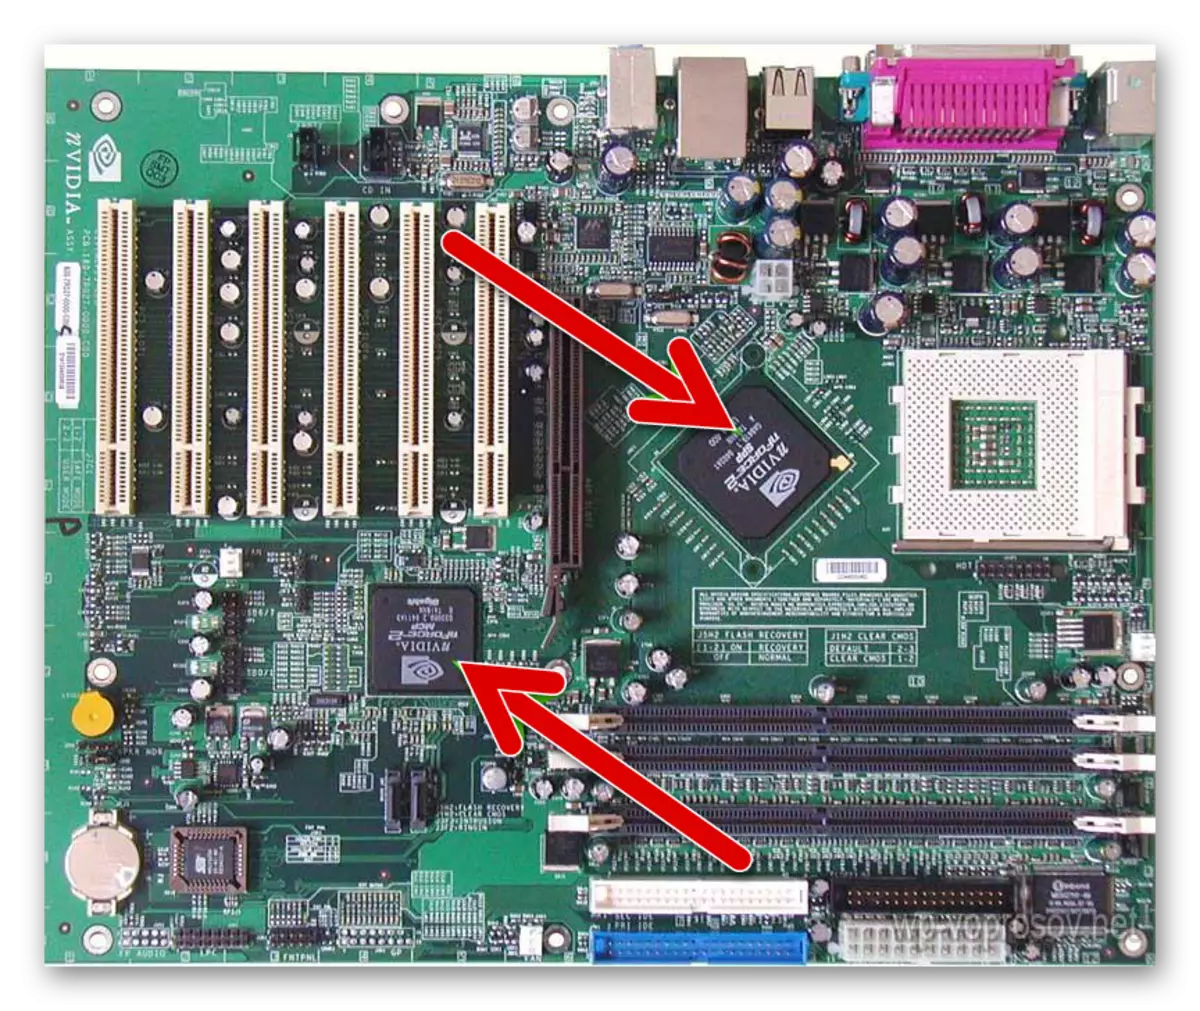 Chipset pada motherboard komputer